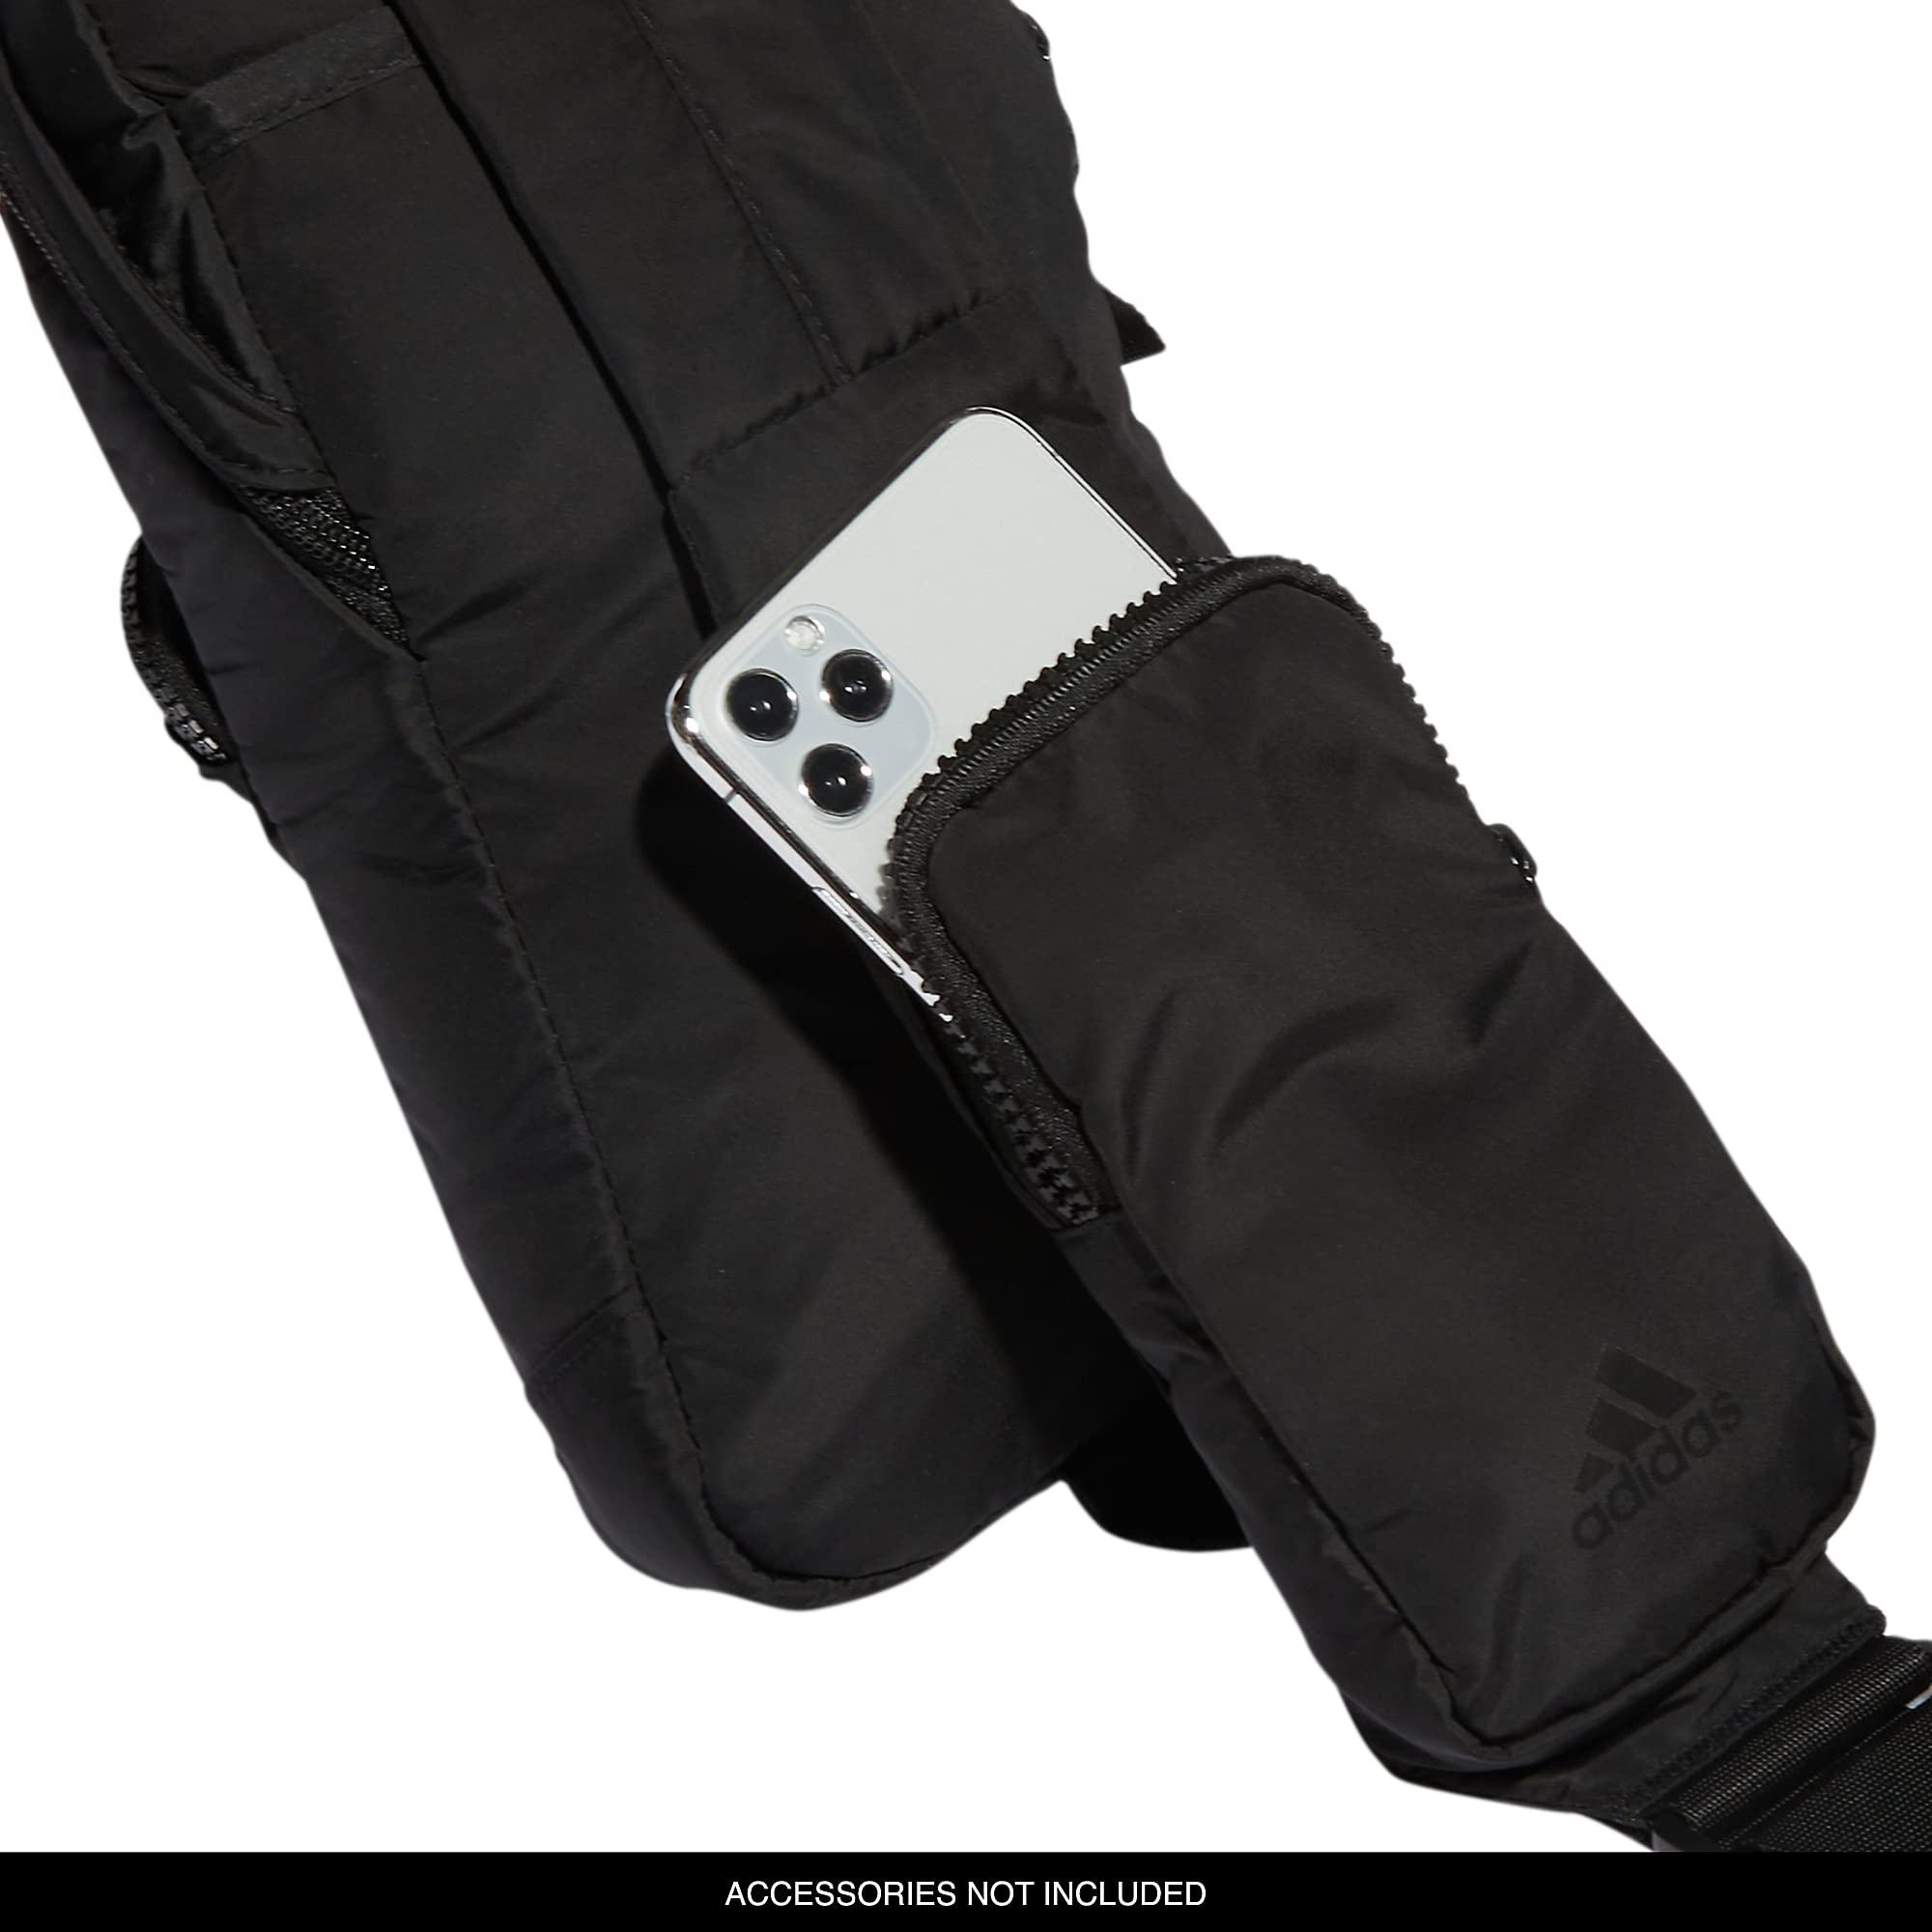 adidas Essentials 2 Sling Crossbody Bag, Black, One Size